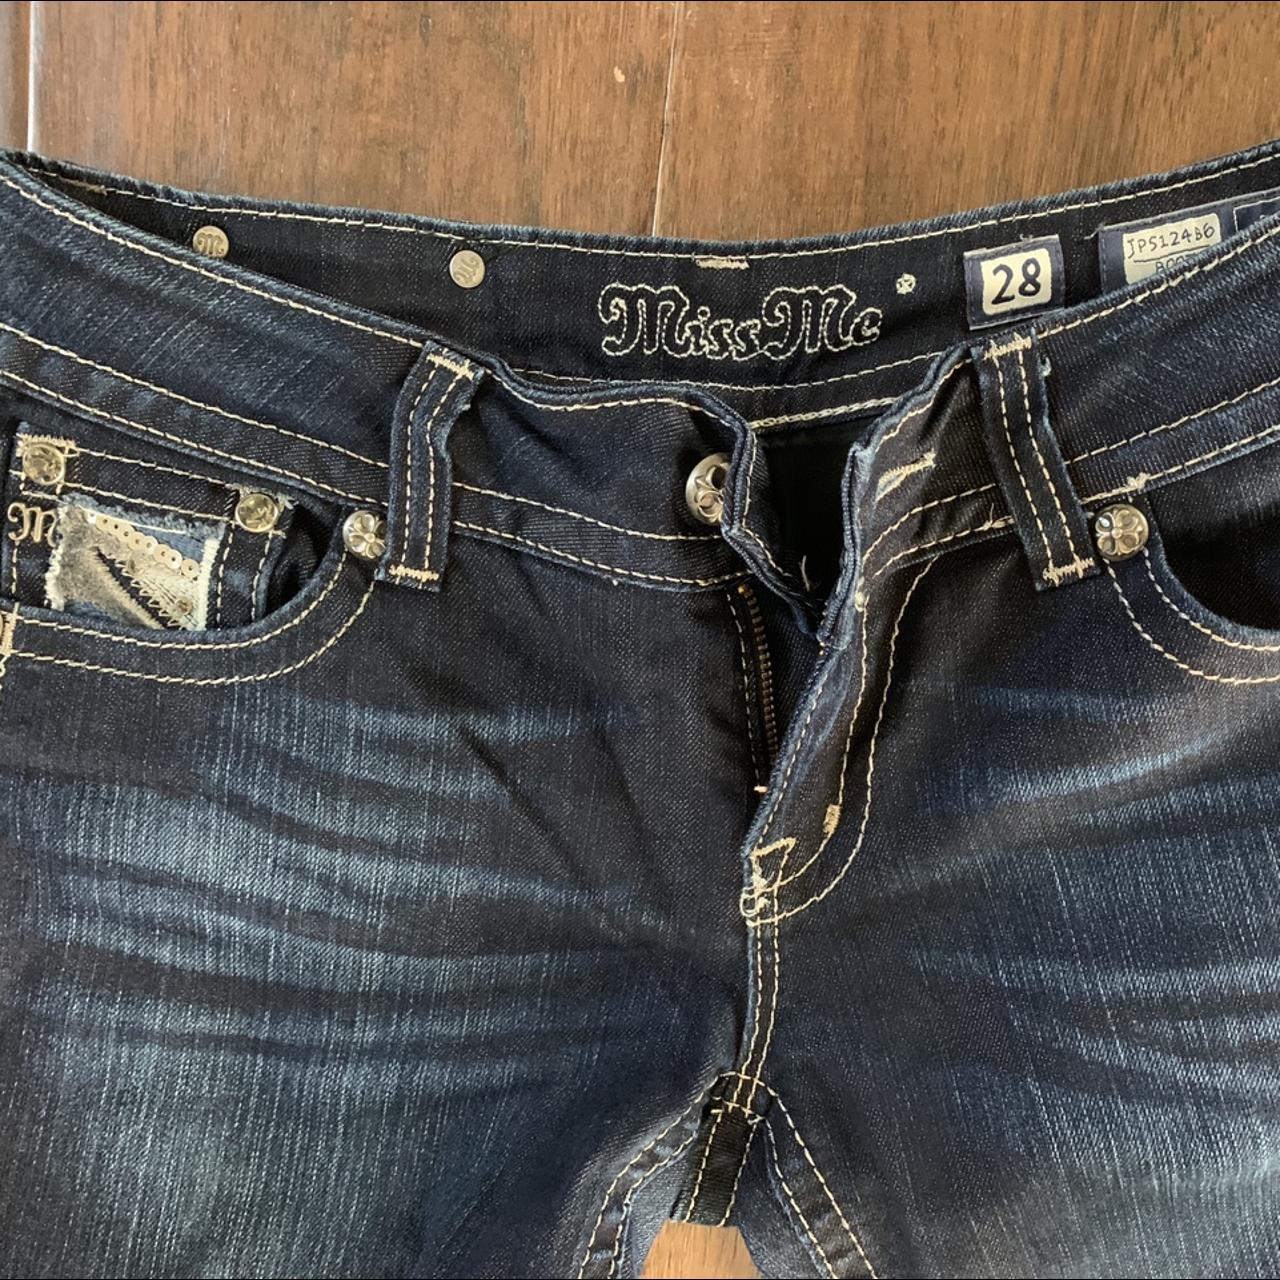 Miss Me JP5124B6 boot cut jeans size 28. The back... - Depop